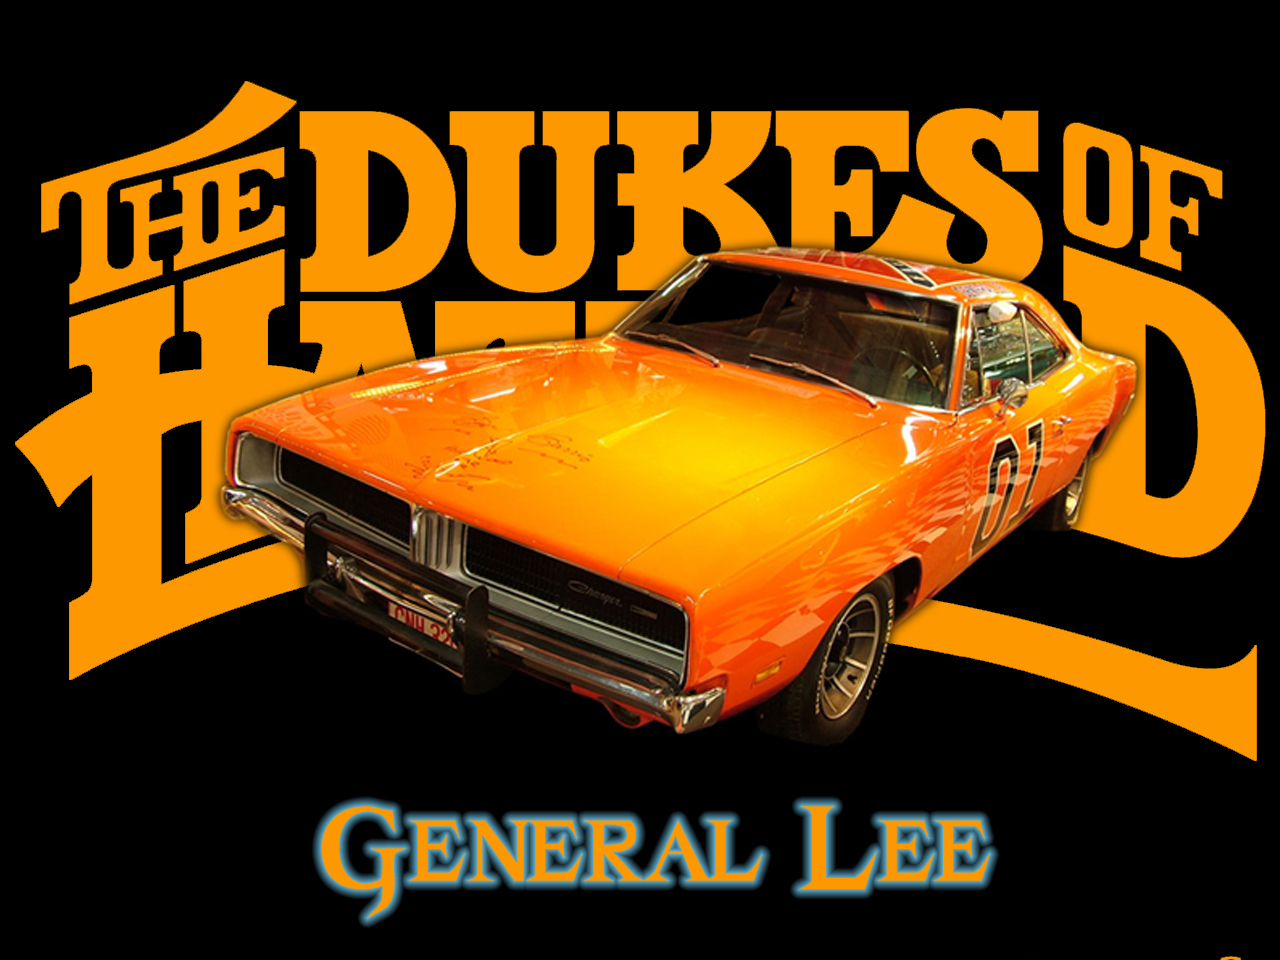 General Lee Dukes of Hazzard by xxatwaxx